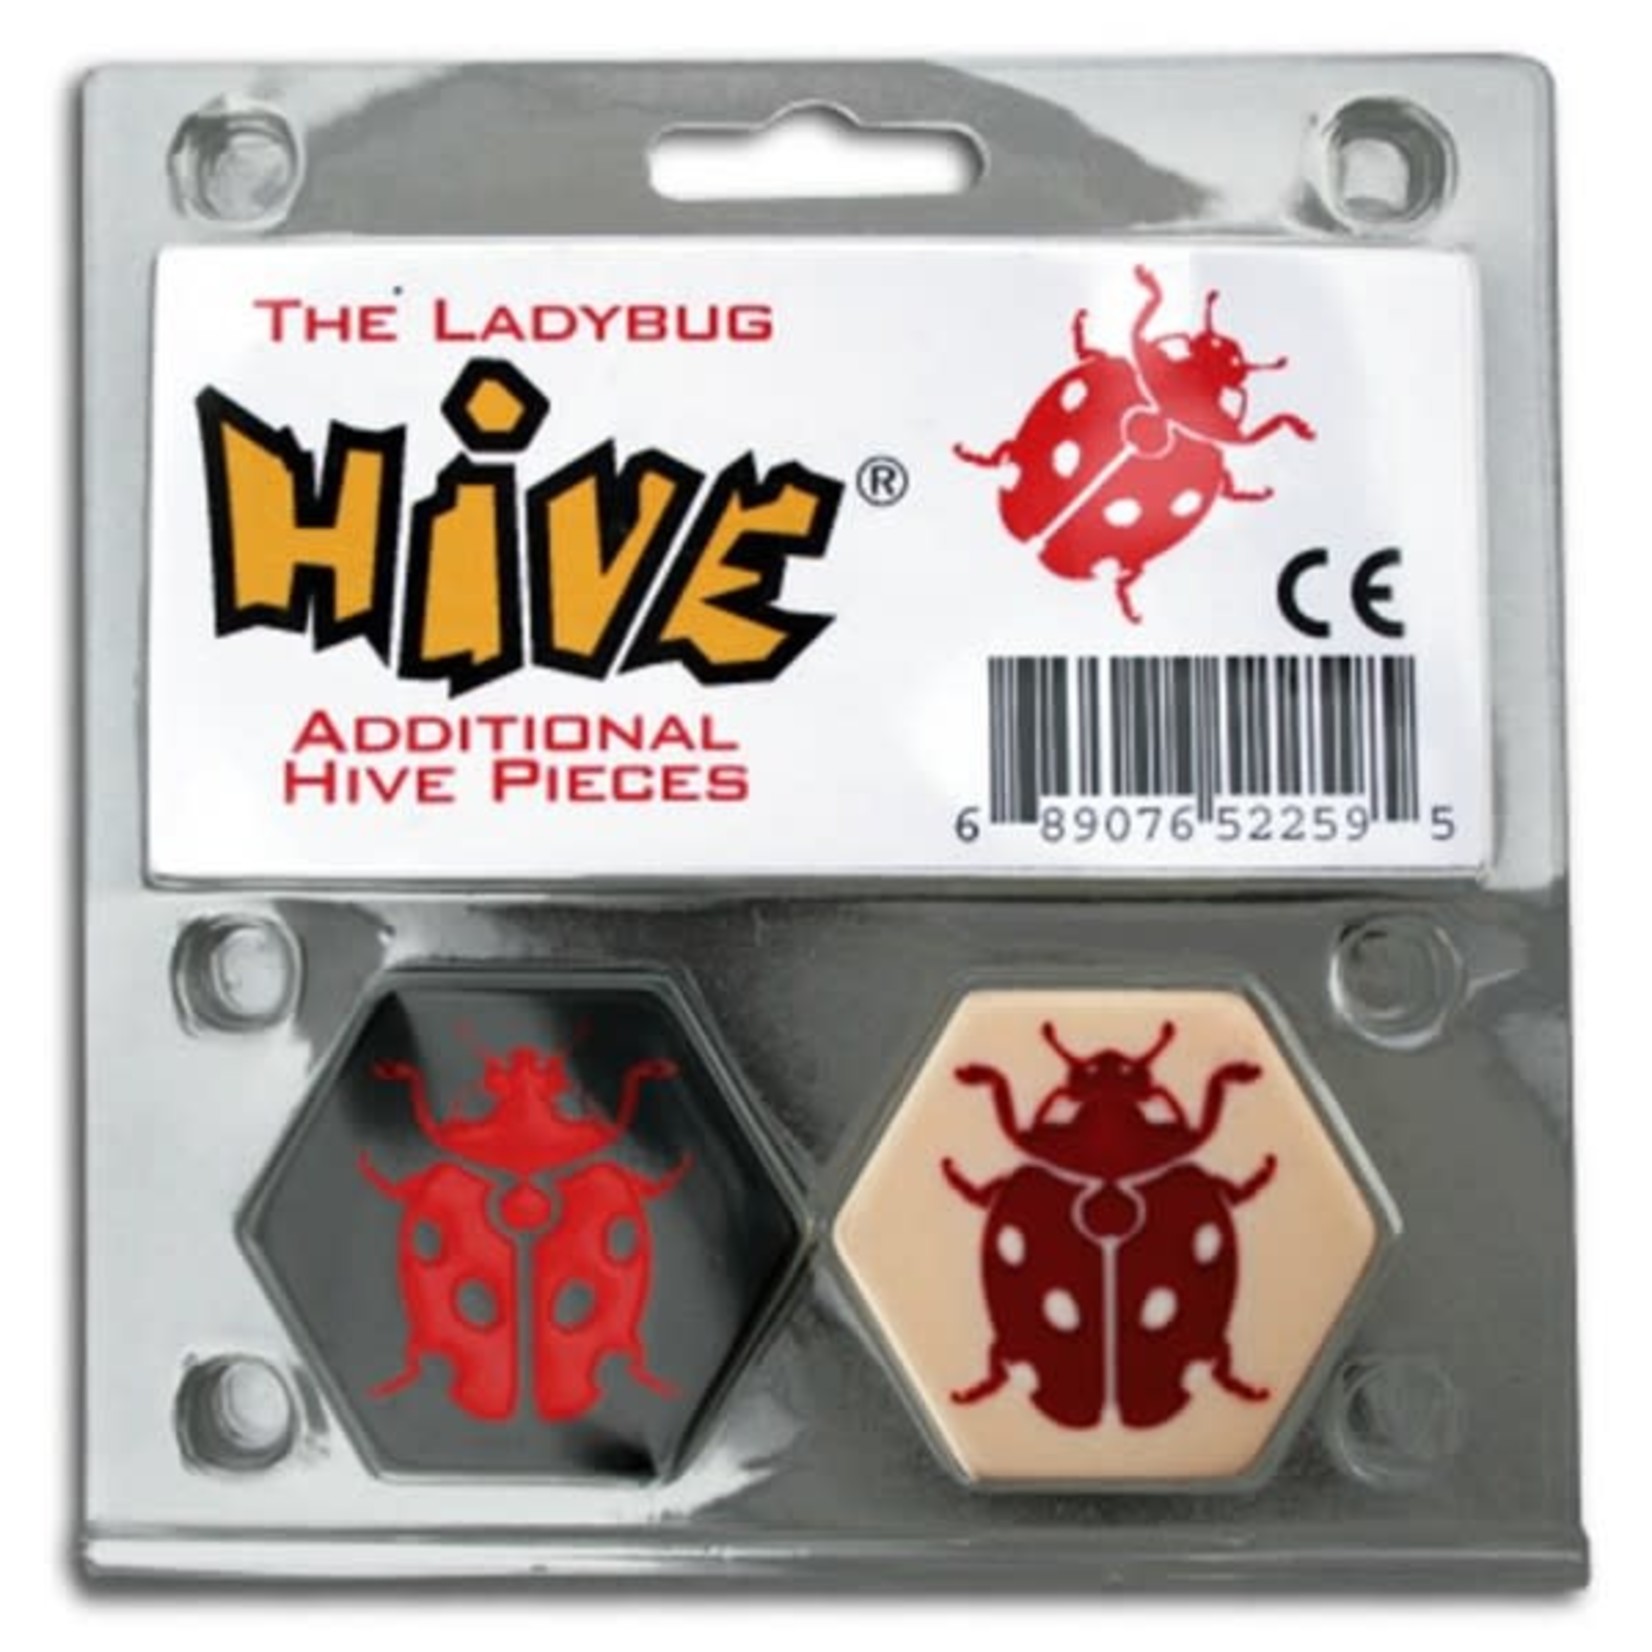 Smart Zone Games Hive Ladybug Expansion